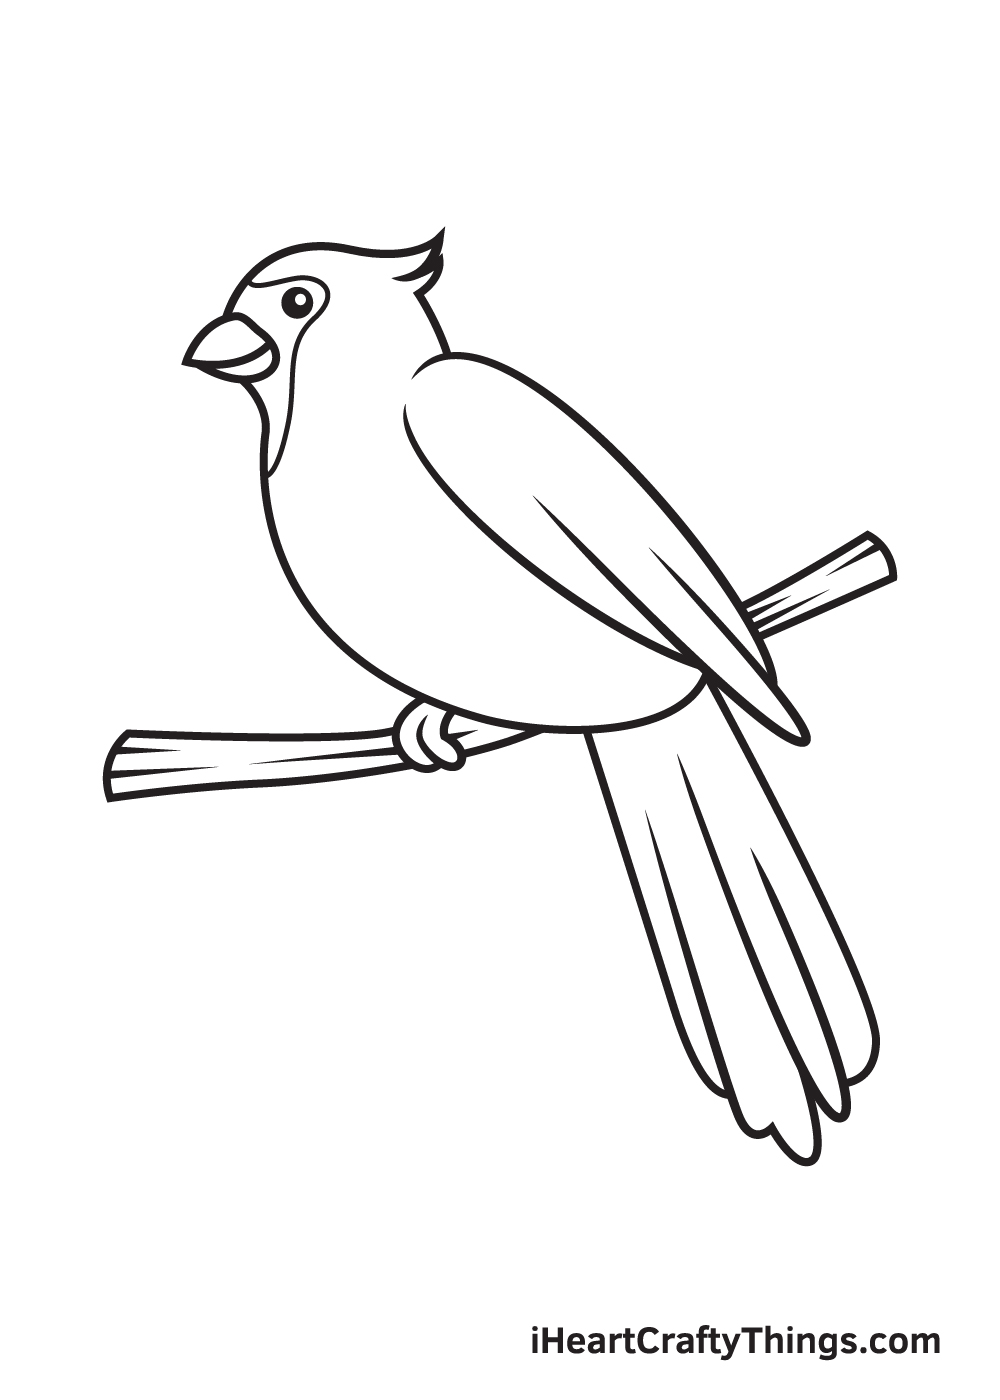 flying cardinal drawing